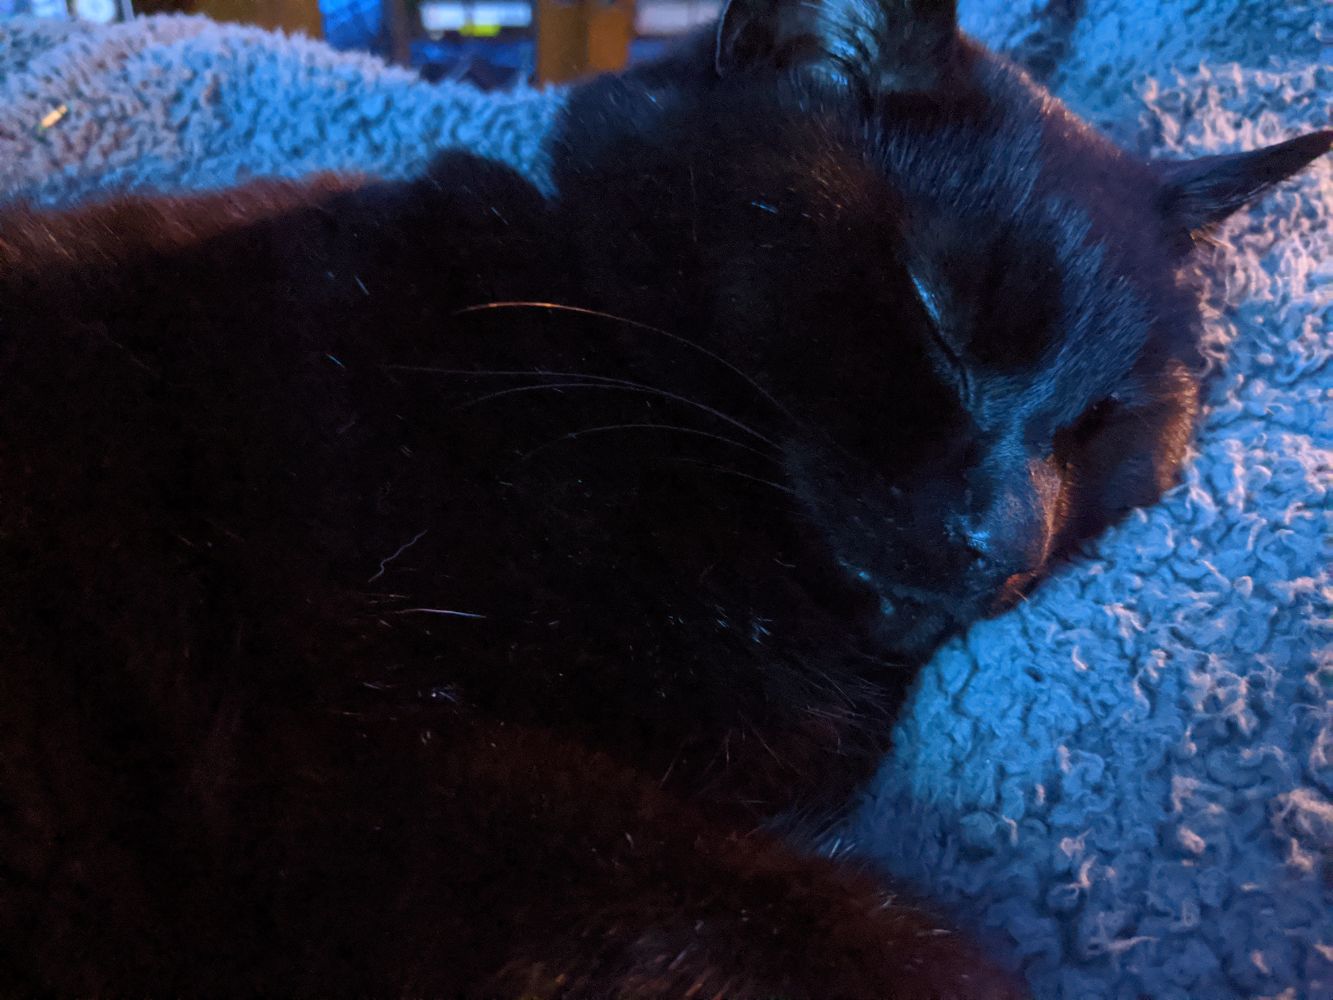 Black cat sleeping